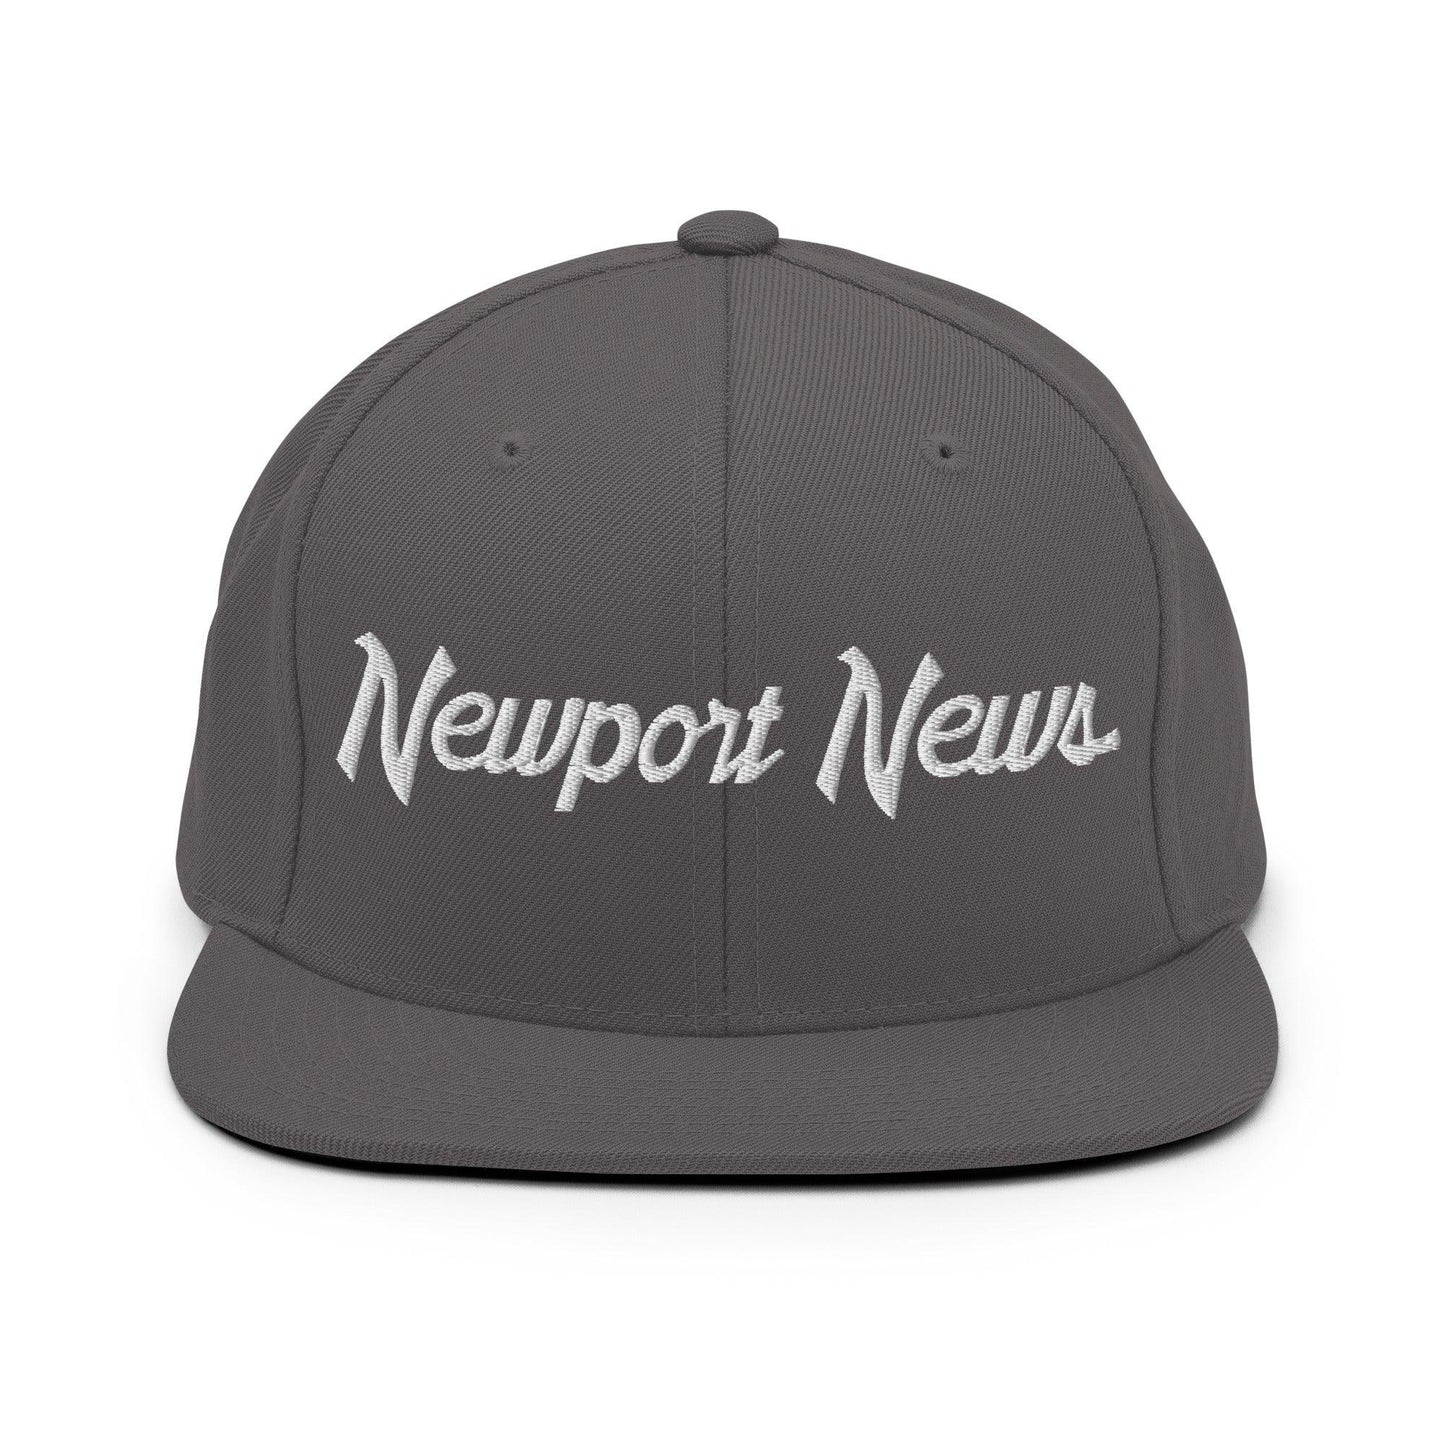 Newport News Script Snapback Hat Dark Grey